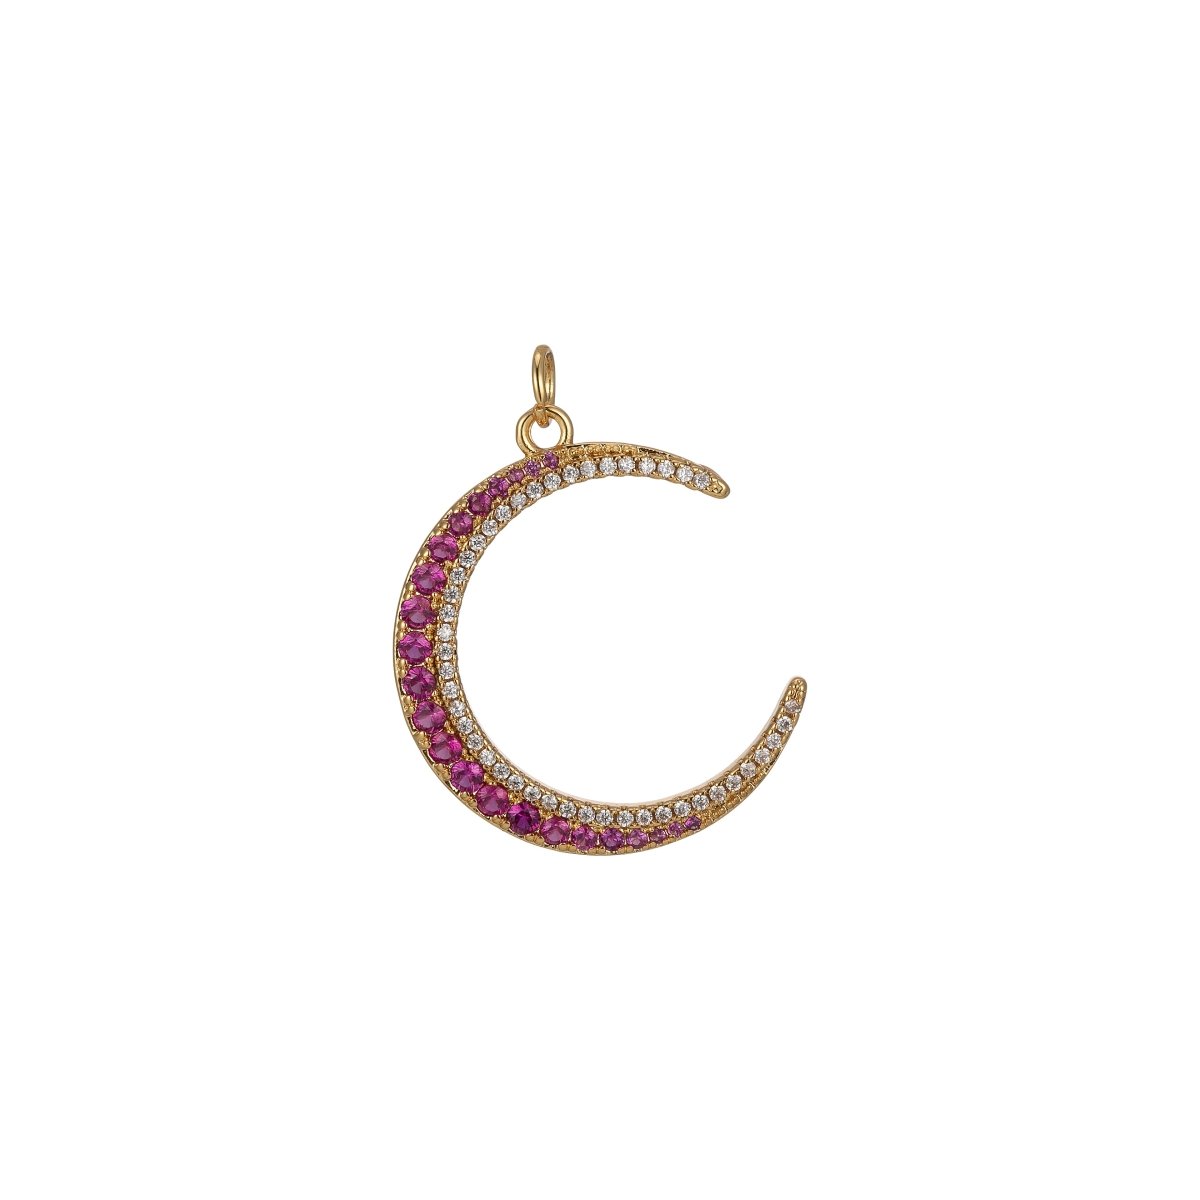 Micro Pave Crescent Moon Charm for Celestial Pendant Jewelry Making E-930 E-931 - DLUXCA